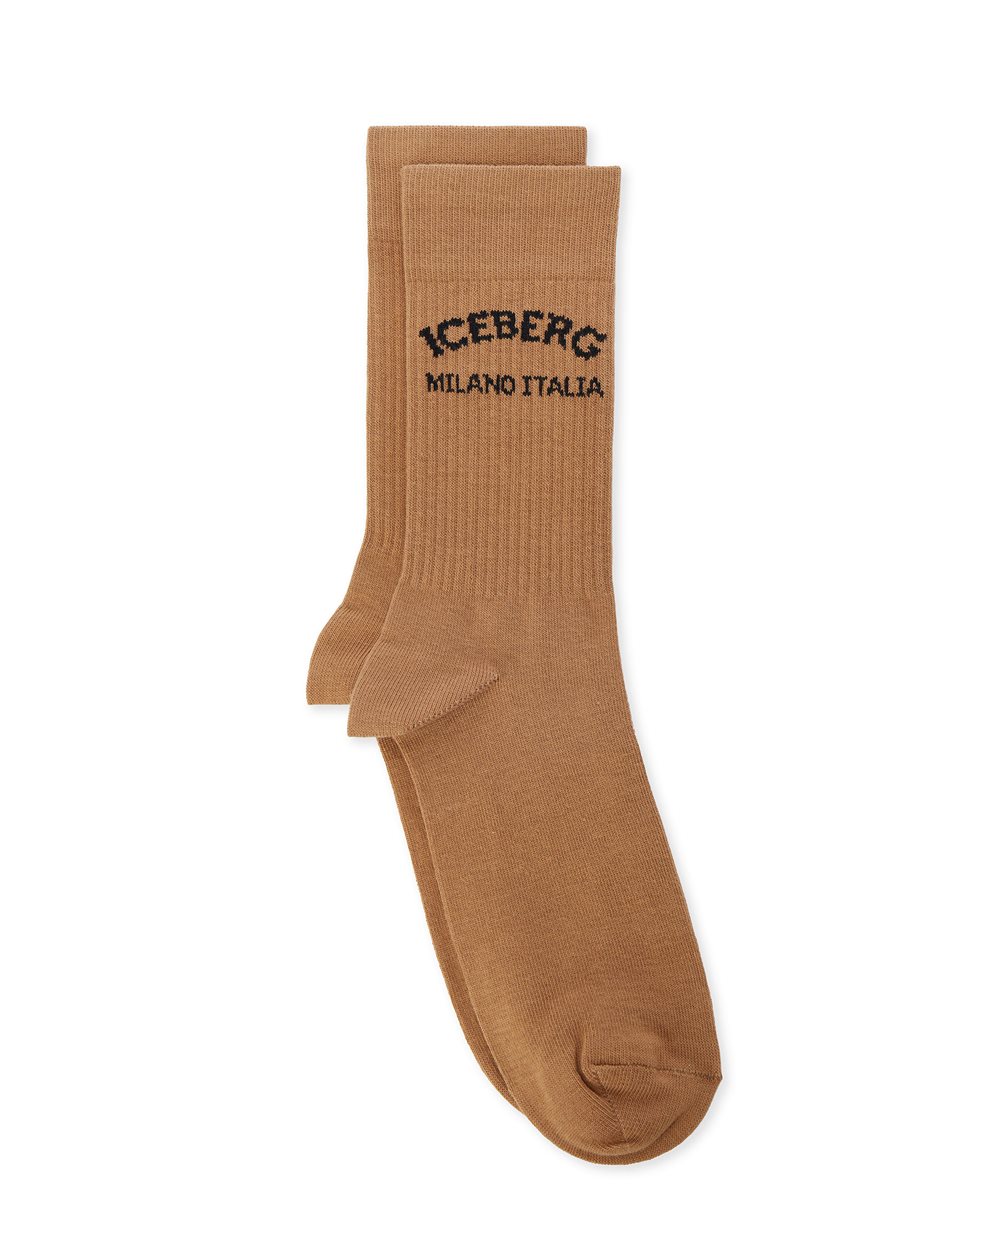 Cotton socks with logo - carosello preview uomo | Iceberg - Official Website